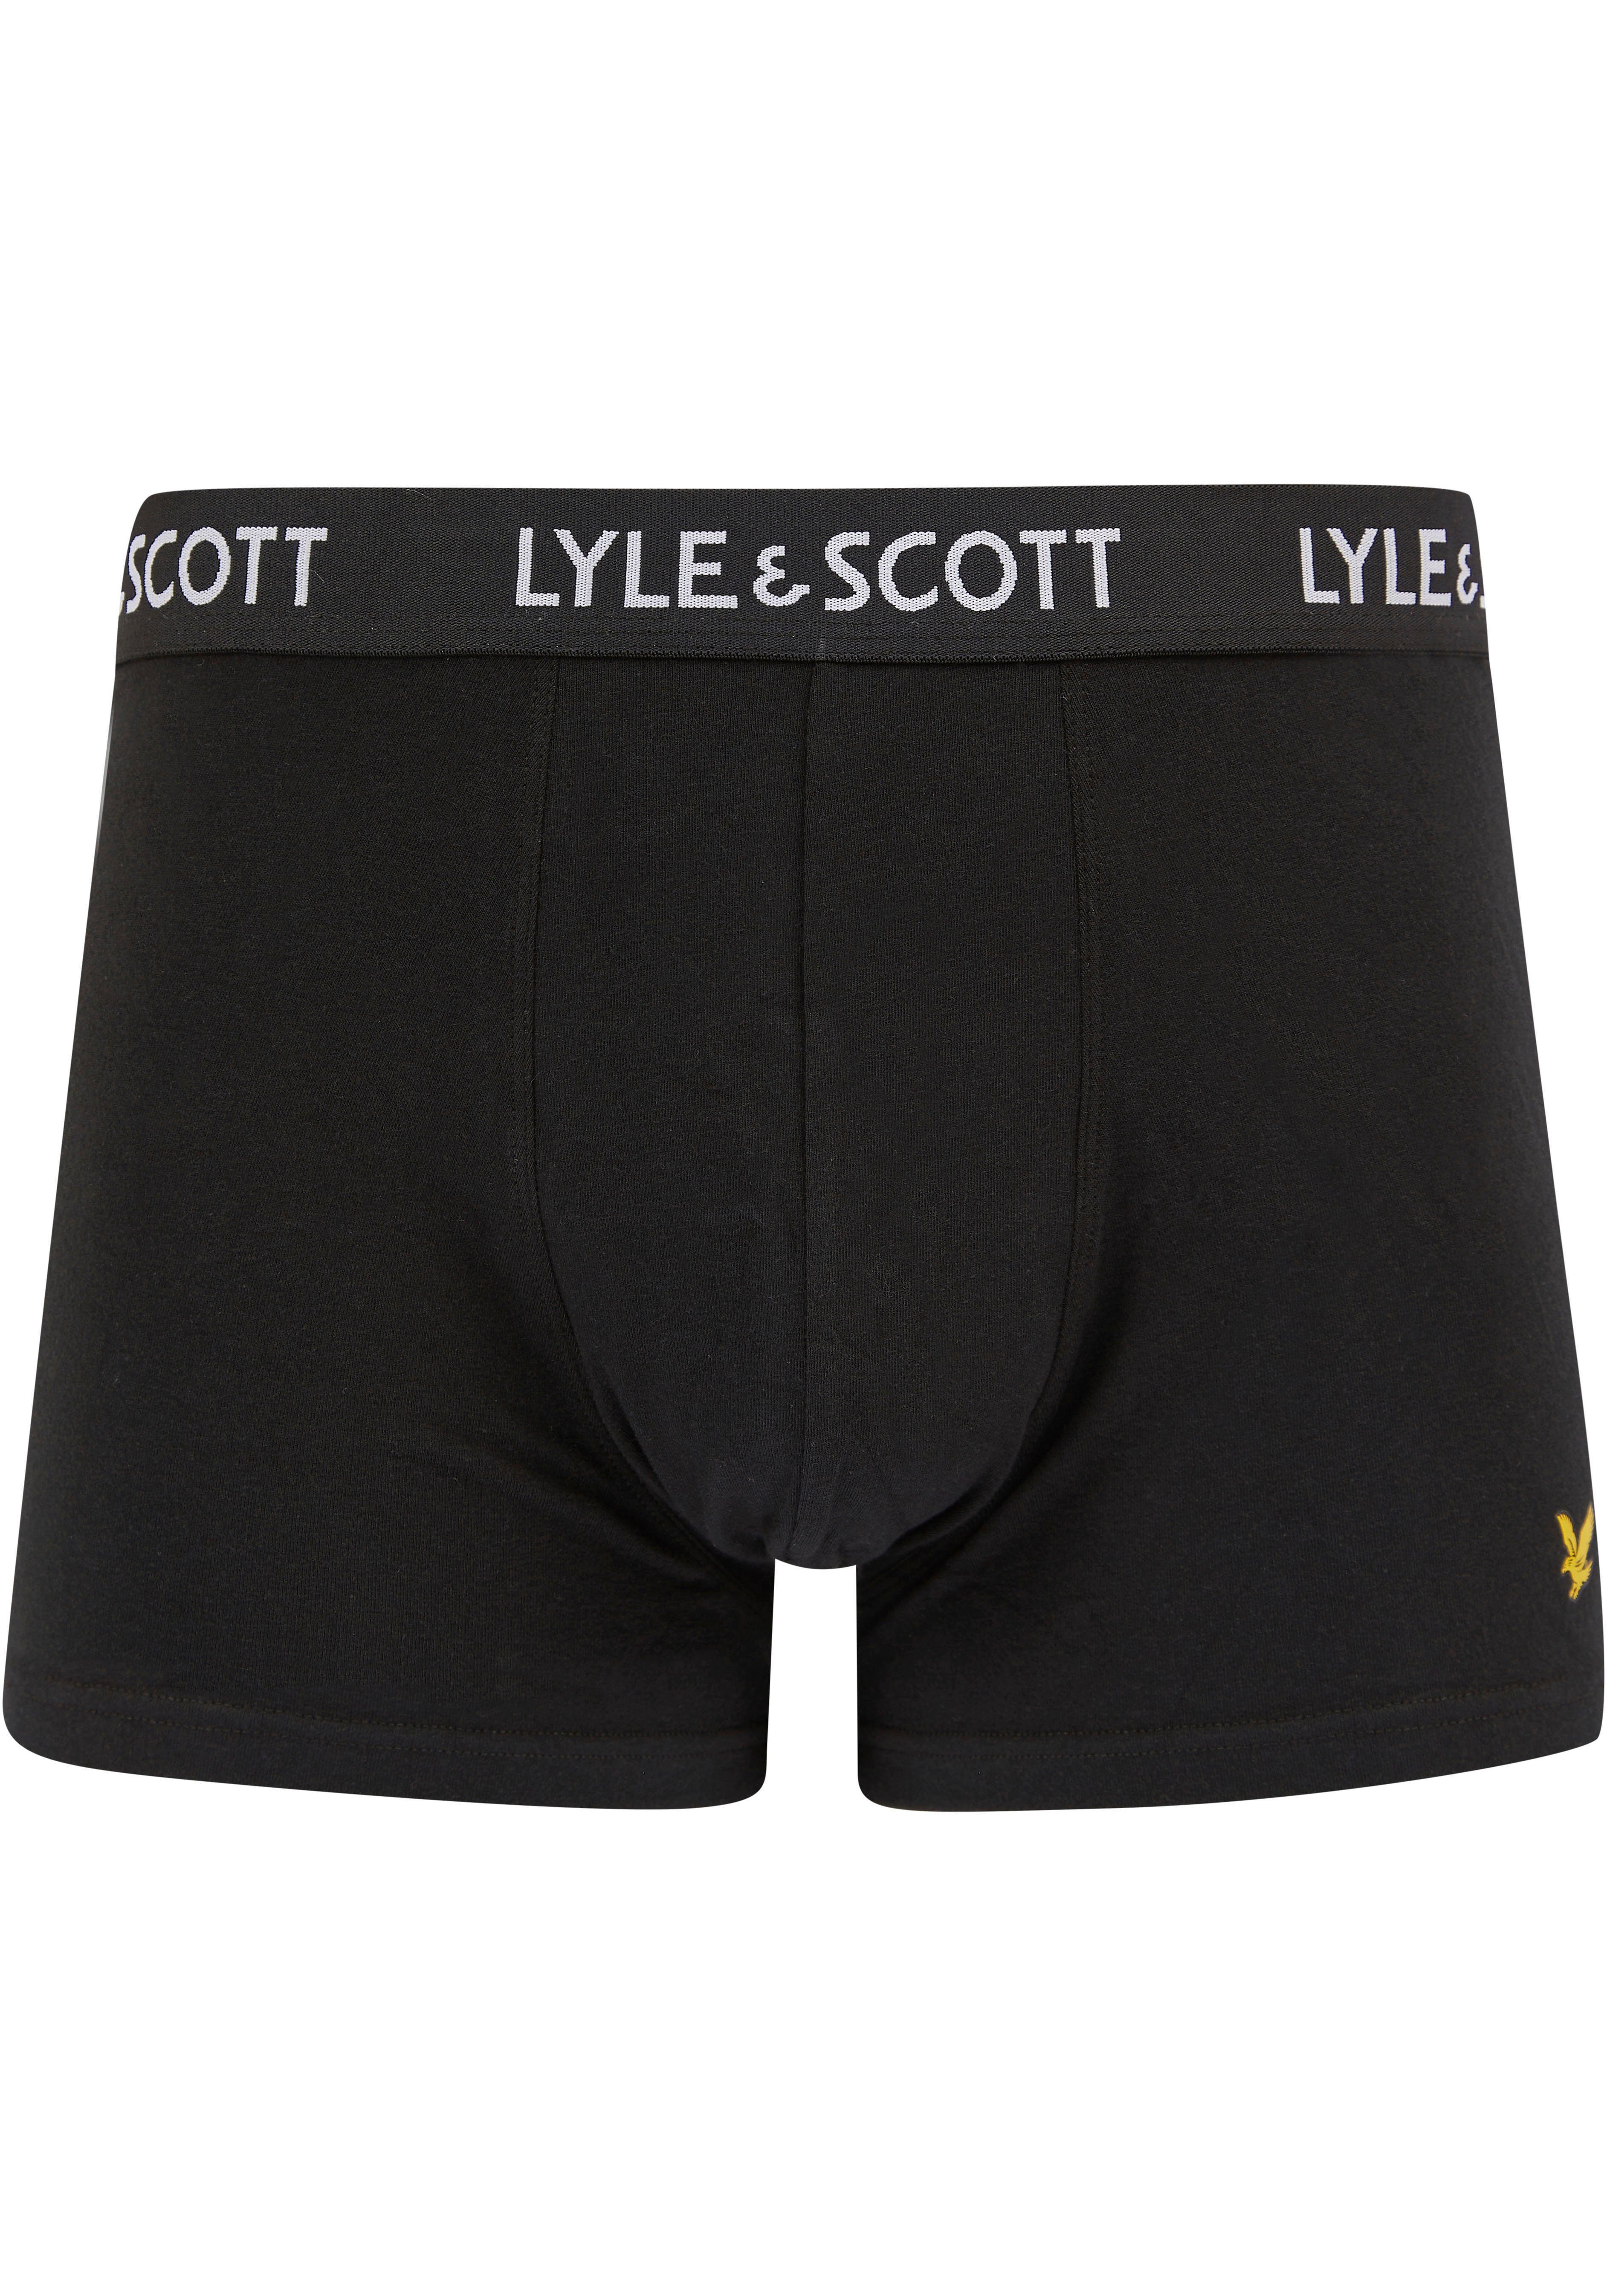 Lyle 5-St) marl/peacoat Boxershorts white/light marl/dark mit Logo-Elastikbund Scott black/bright & grey grey (Packung,